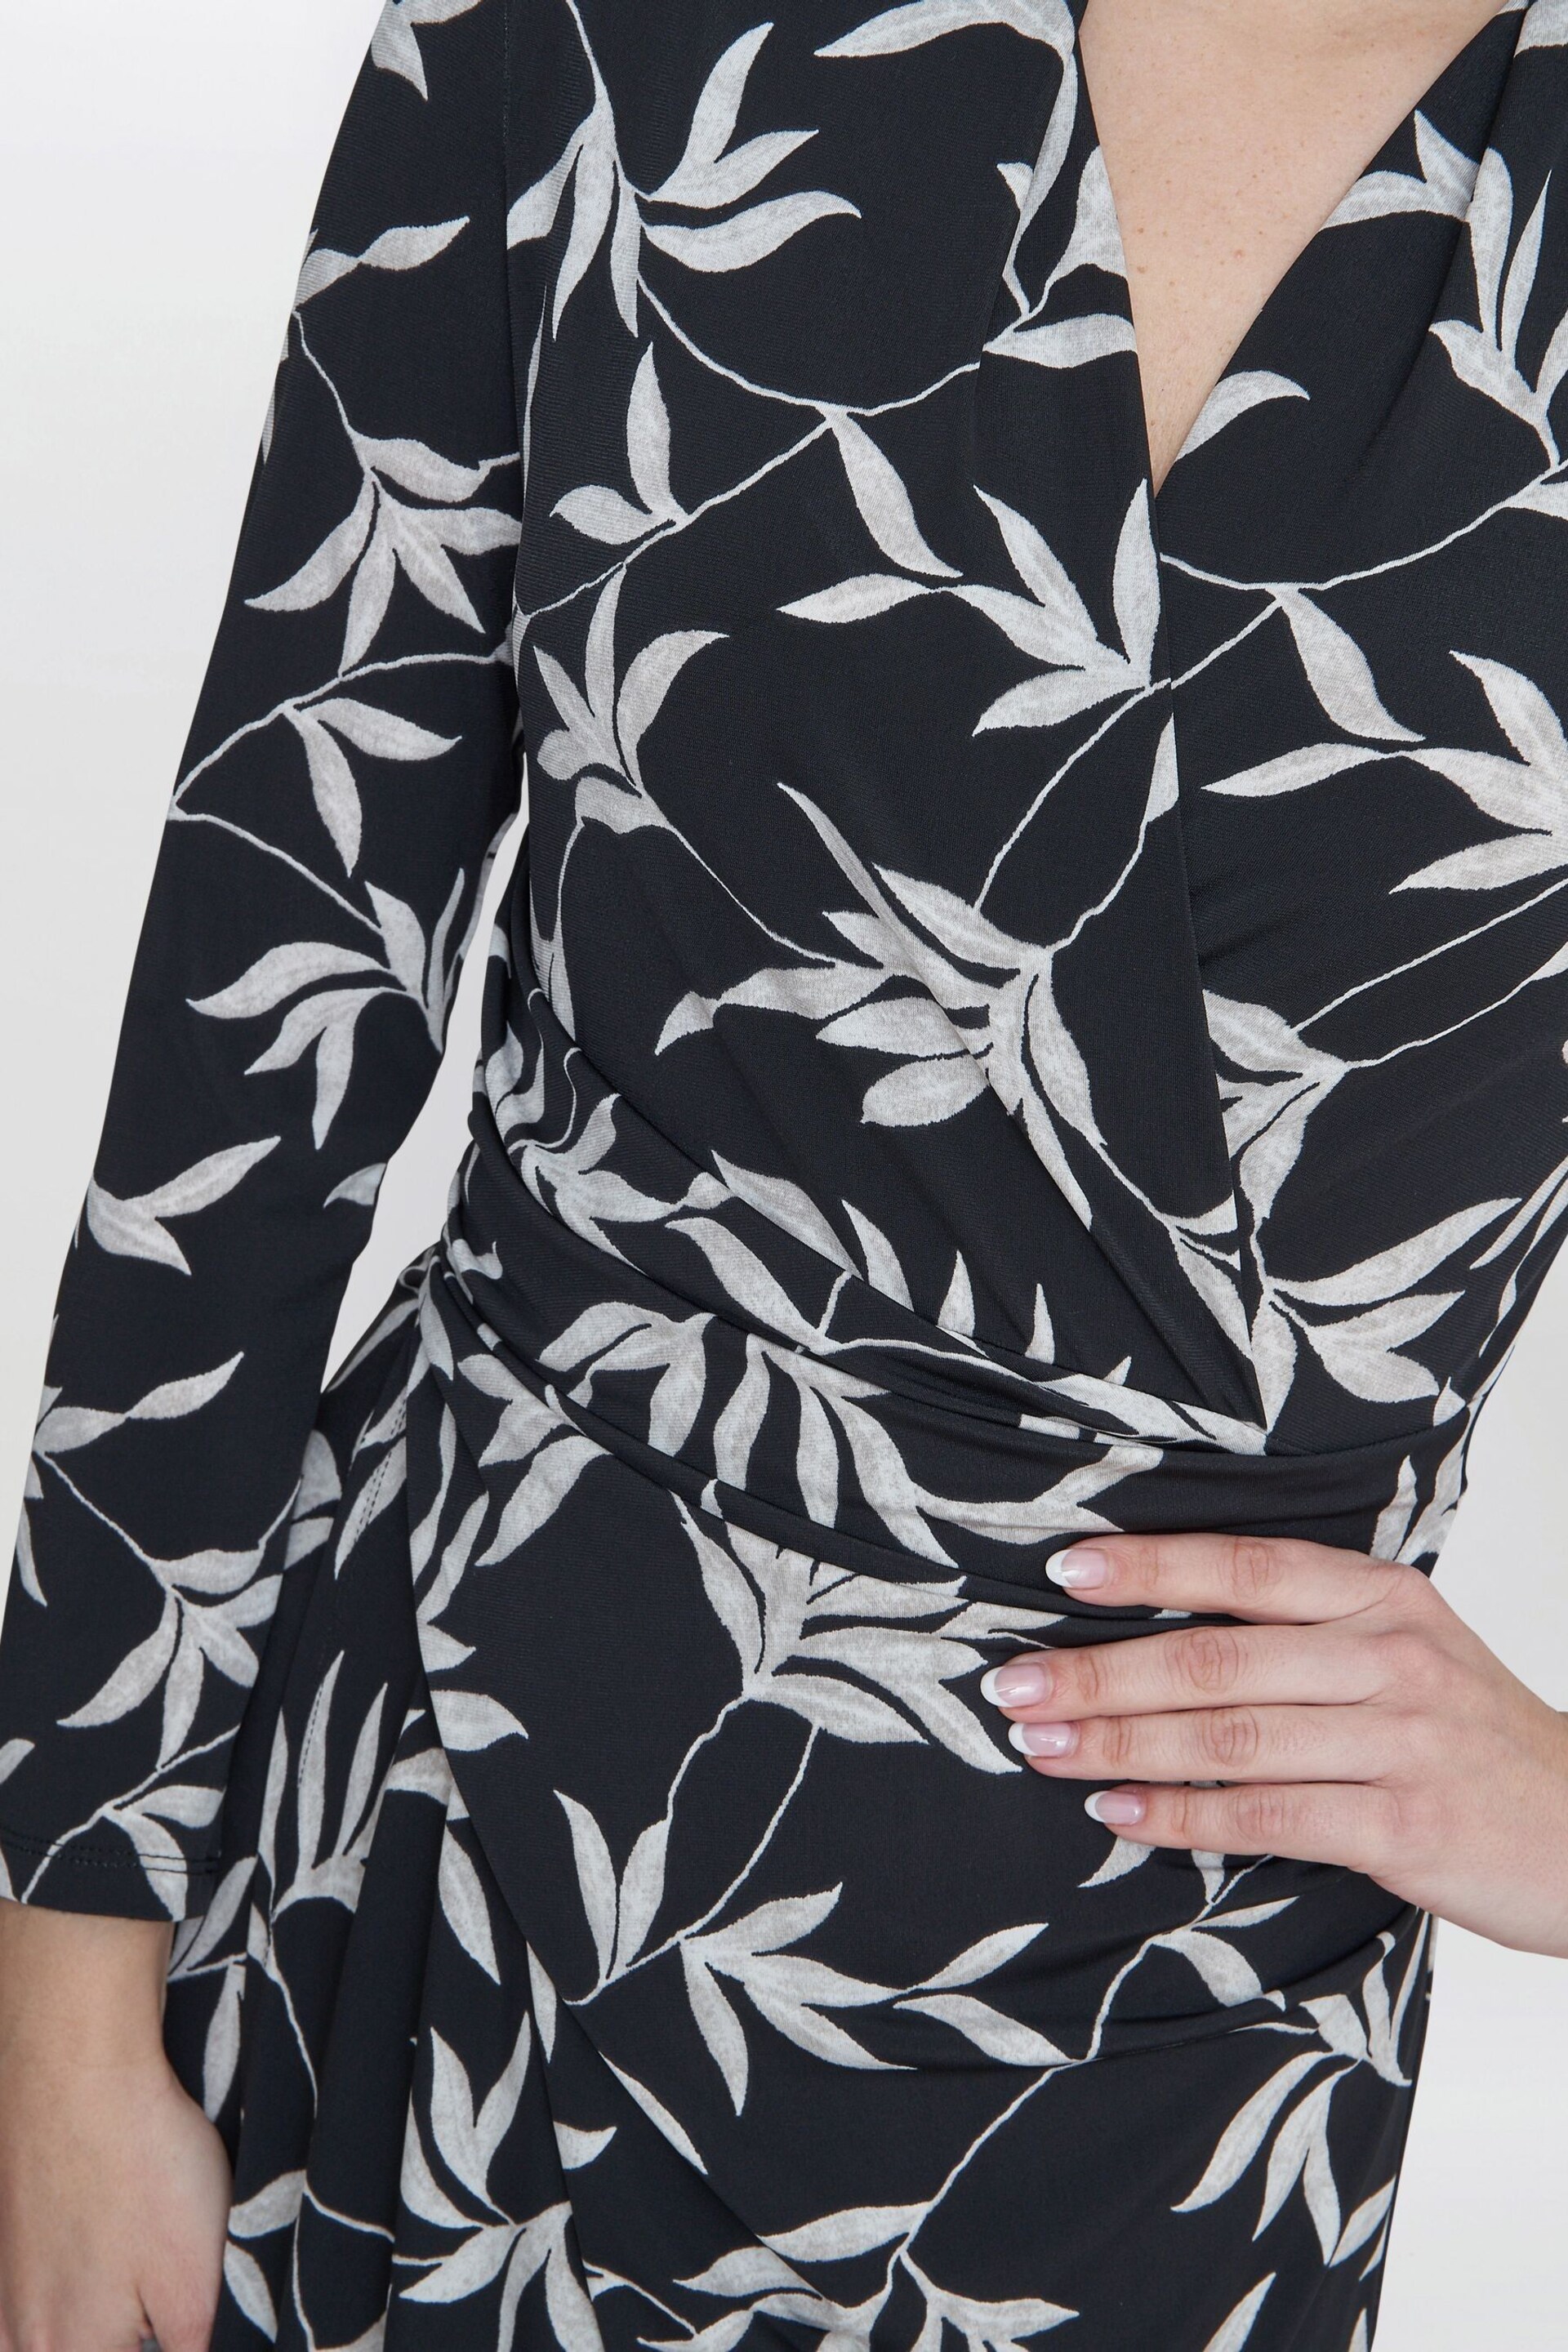 Gina Bacconi Jade Jersey Wrap Black Maxi Dress - Image 4 of 4